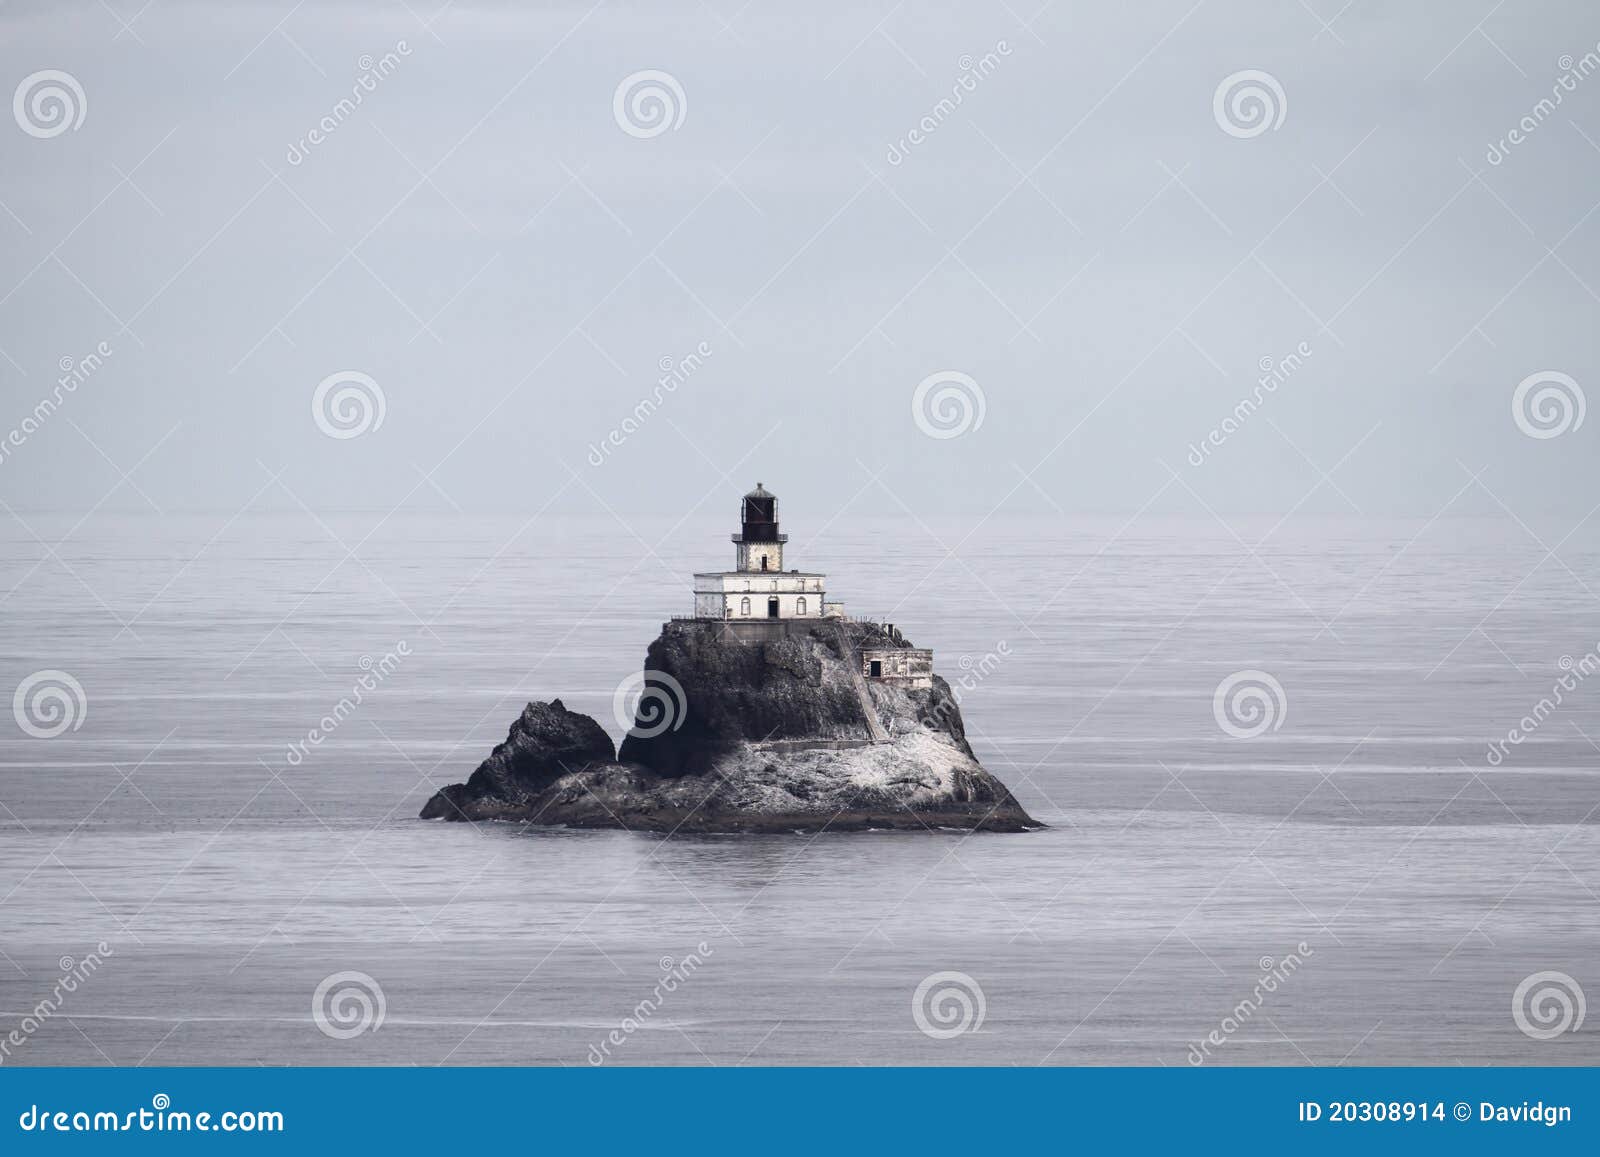 tillamook rock lighthouse at oregon coast